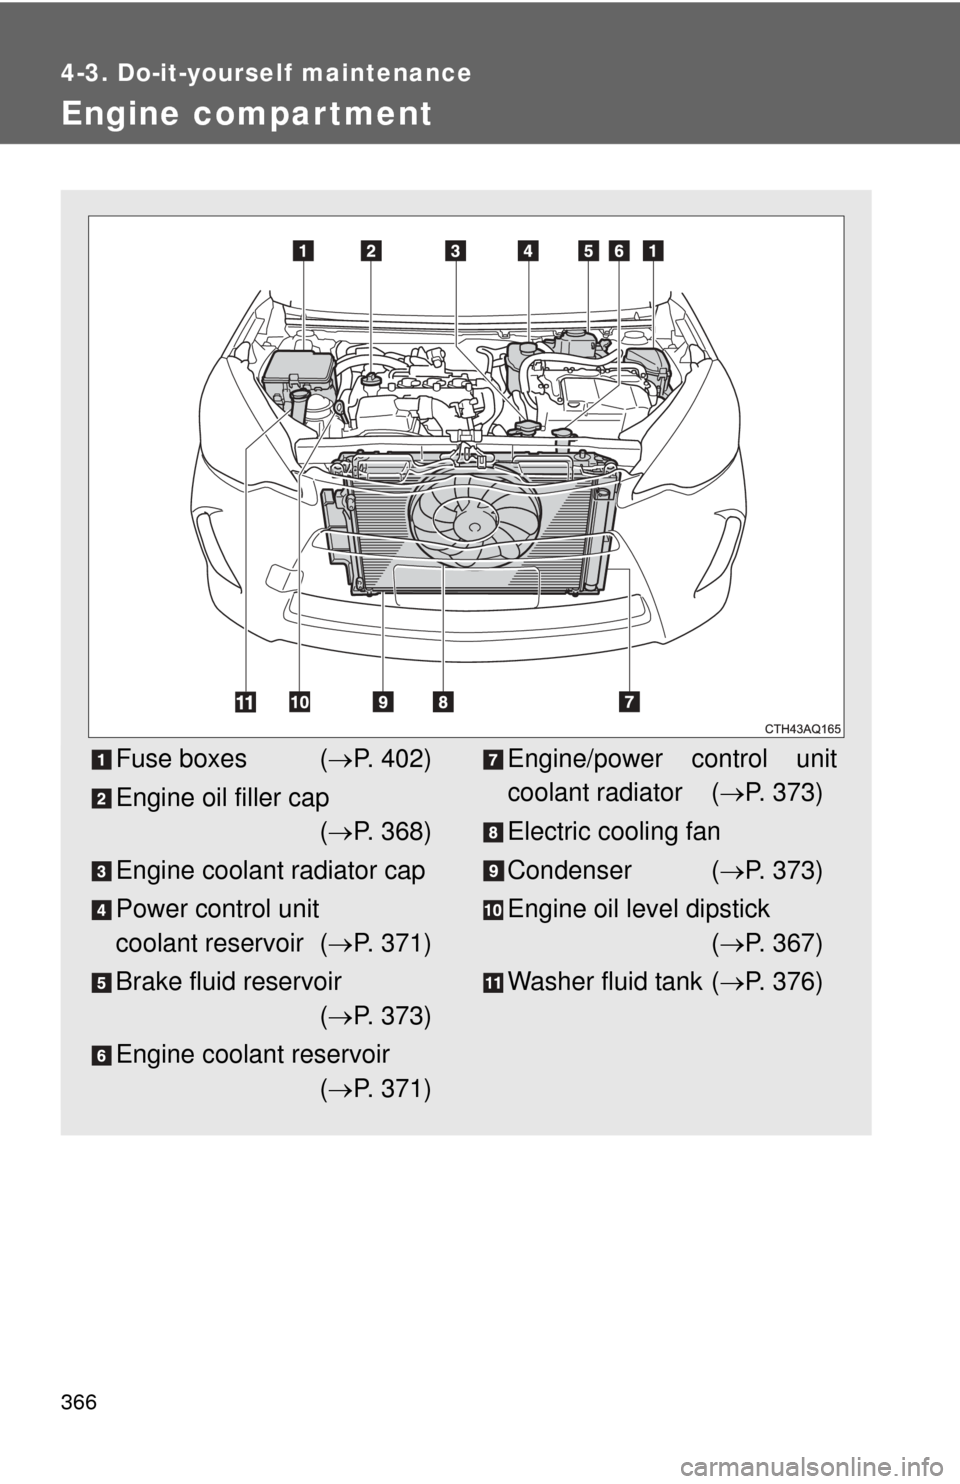 TOYOTA PRIUS C 2013 NHP10 / 1.G Owners Manual 366
4-3. Do-it-yourself maintenance
Engine compar tment
Fuse boxes (P. 402)
Engine oil filler cap ( P. 368)
Engine coolant radiator cap
Power control unit 
coolant reservoir ( P. 371)
Brake f